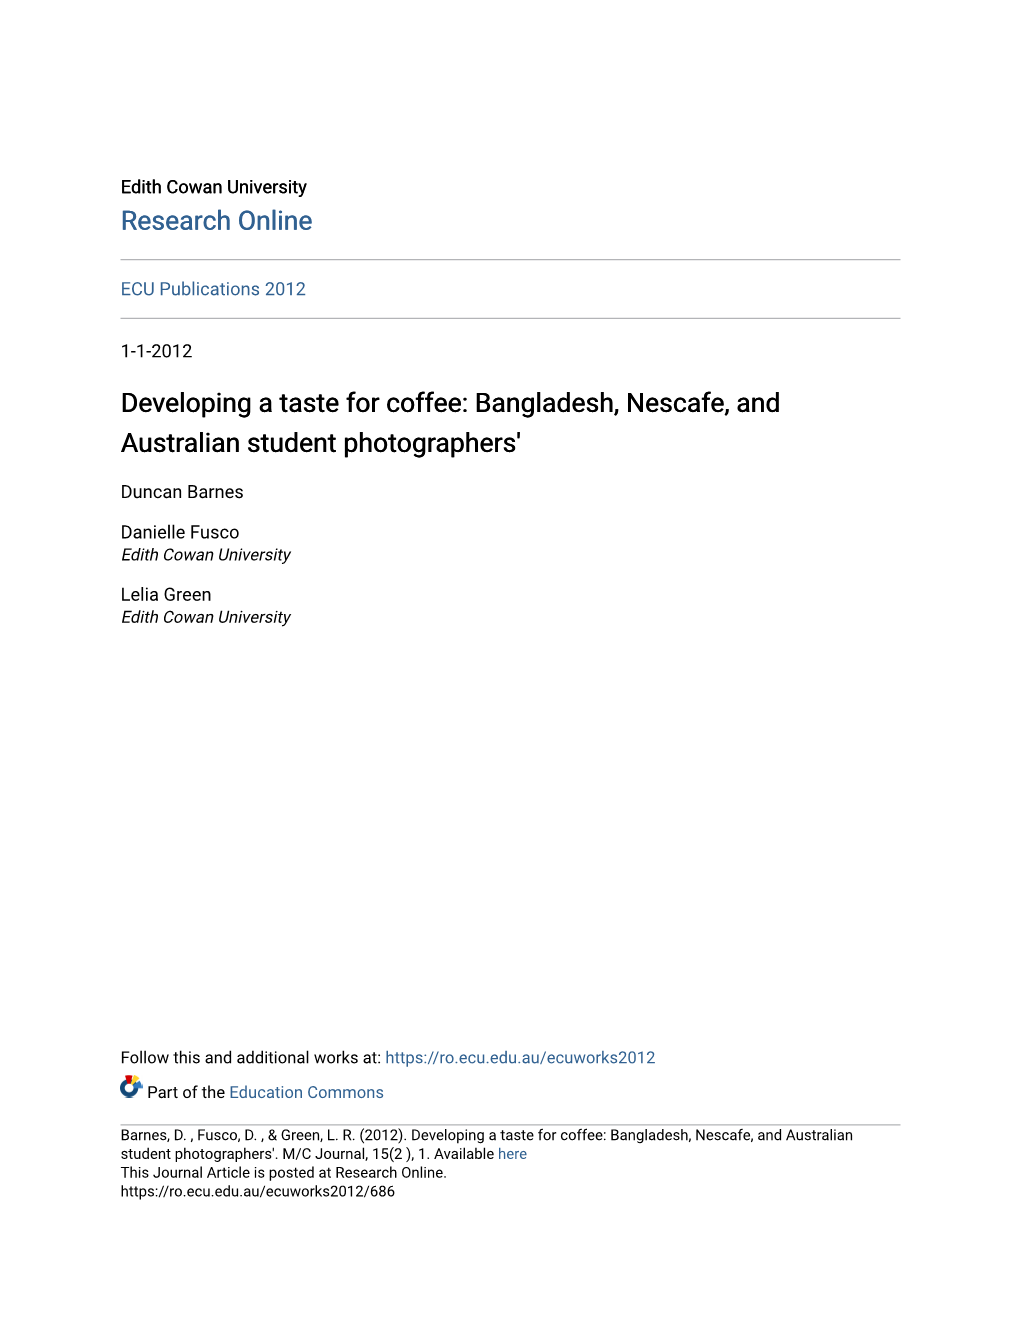 Bangladesh, Nescafe, and Australian Student Photographers'